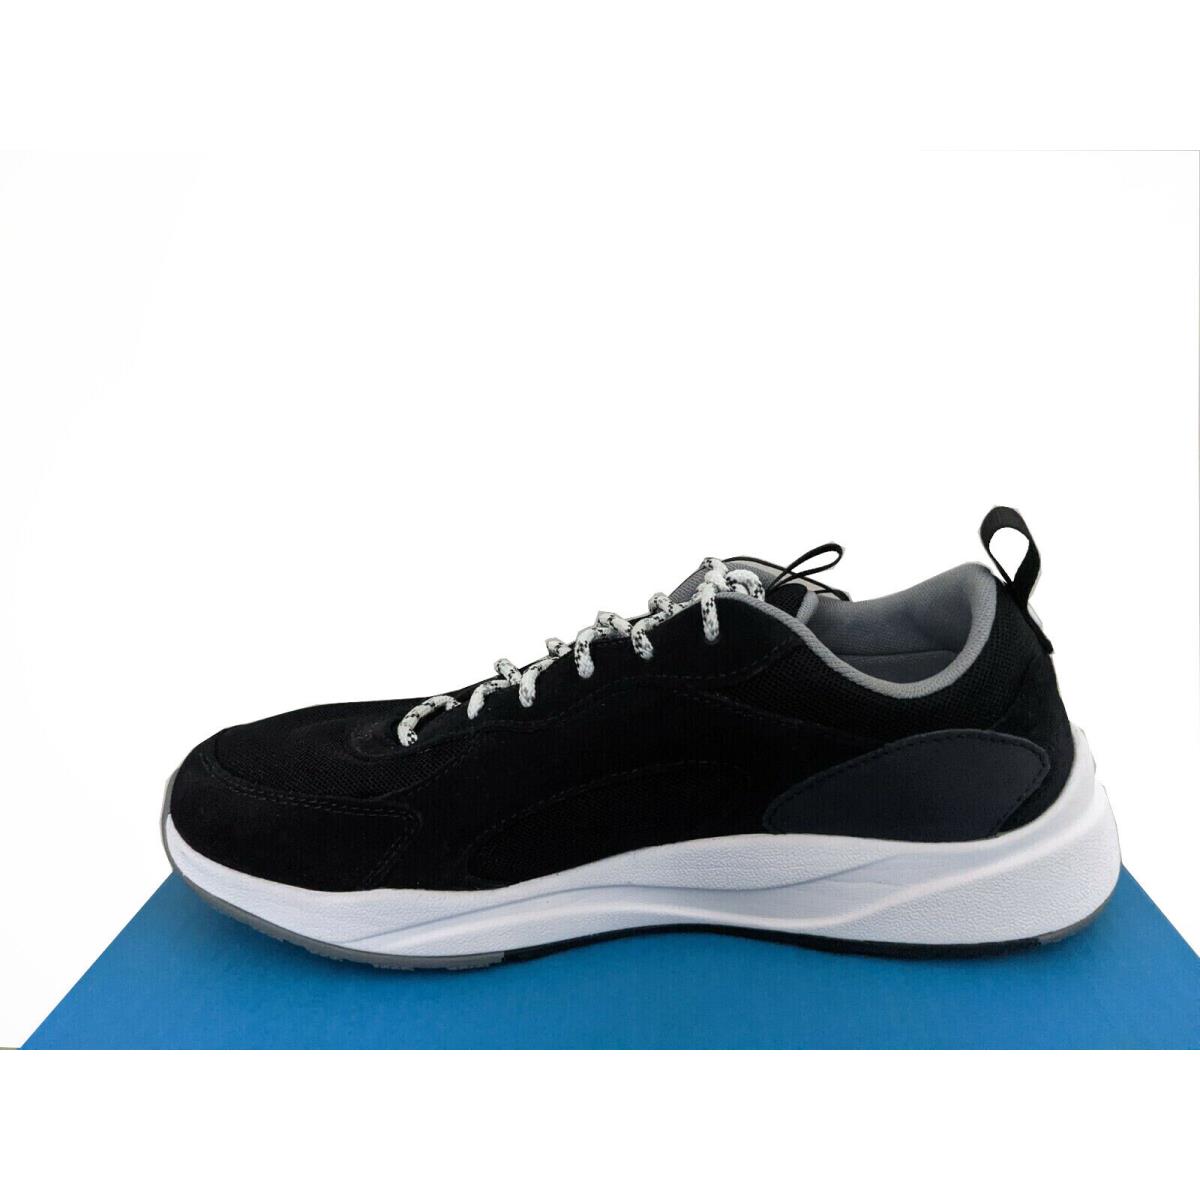 Columbia shoes Horizon Lane Waterproof - Black 2